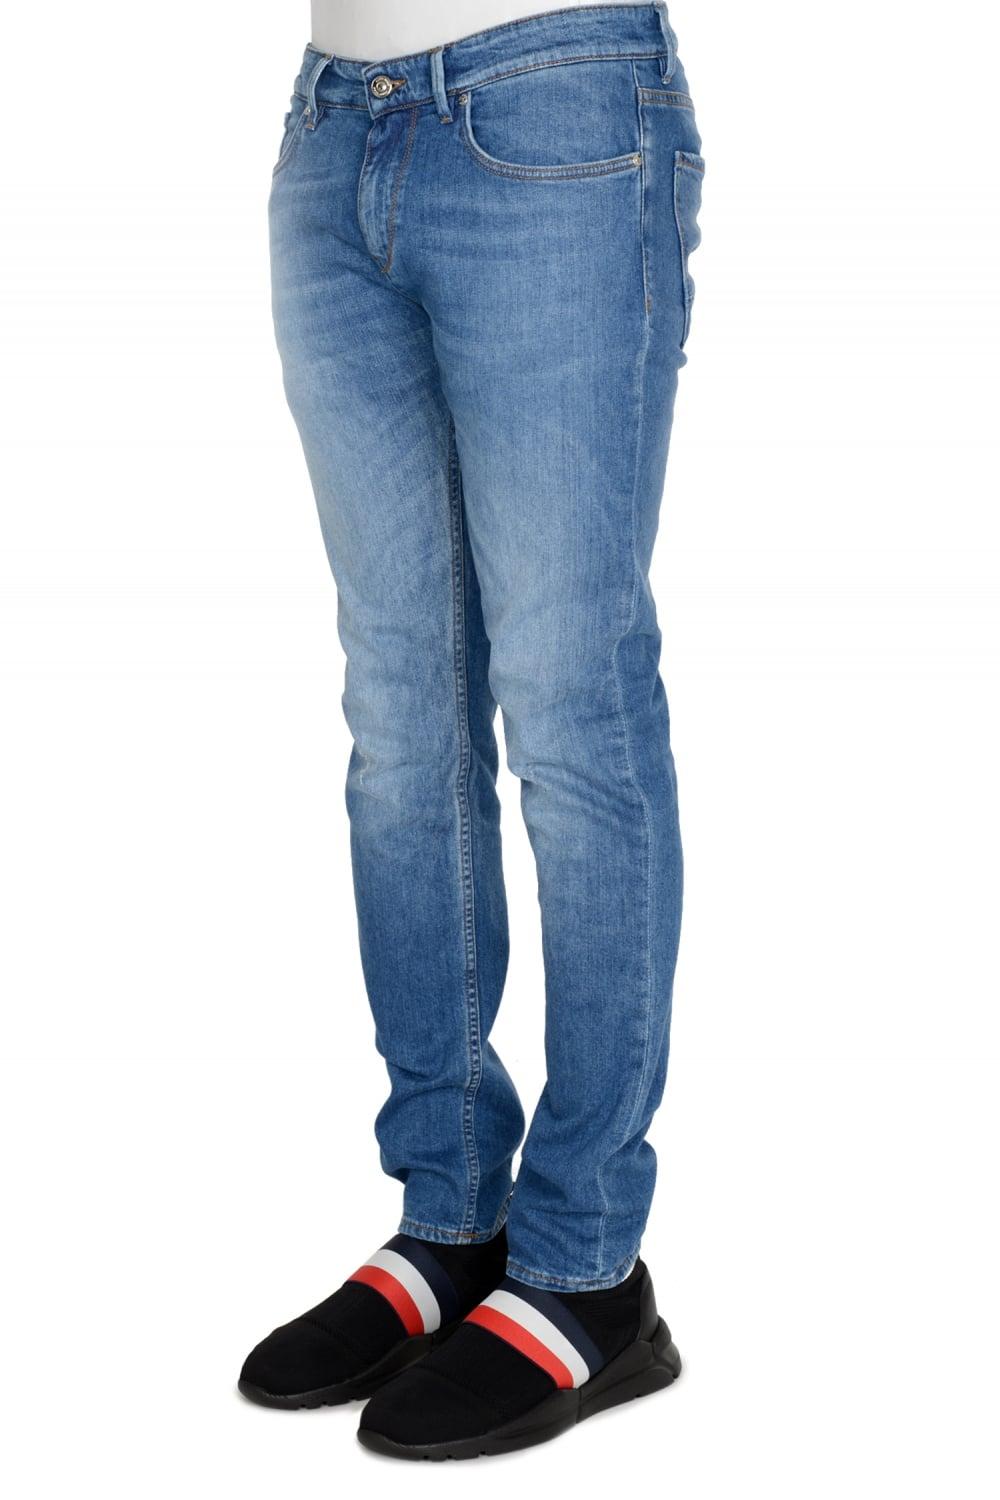 hugo boss charleston jeans